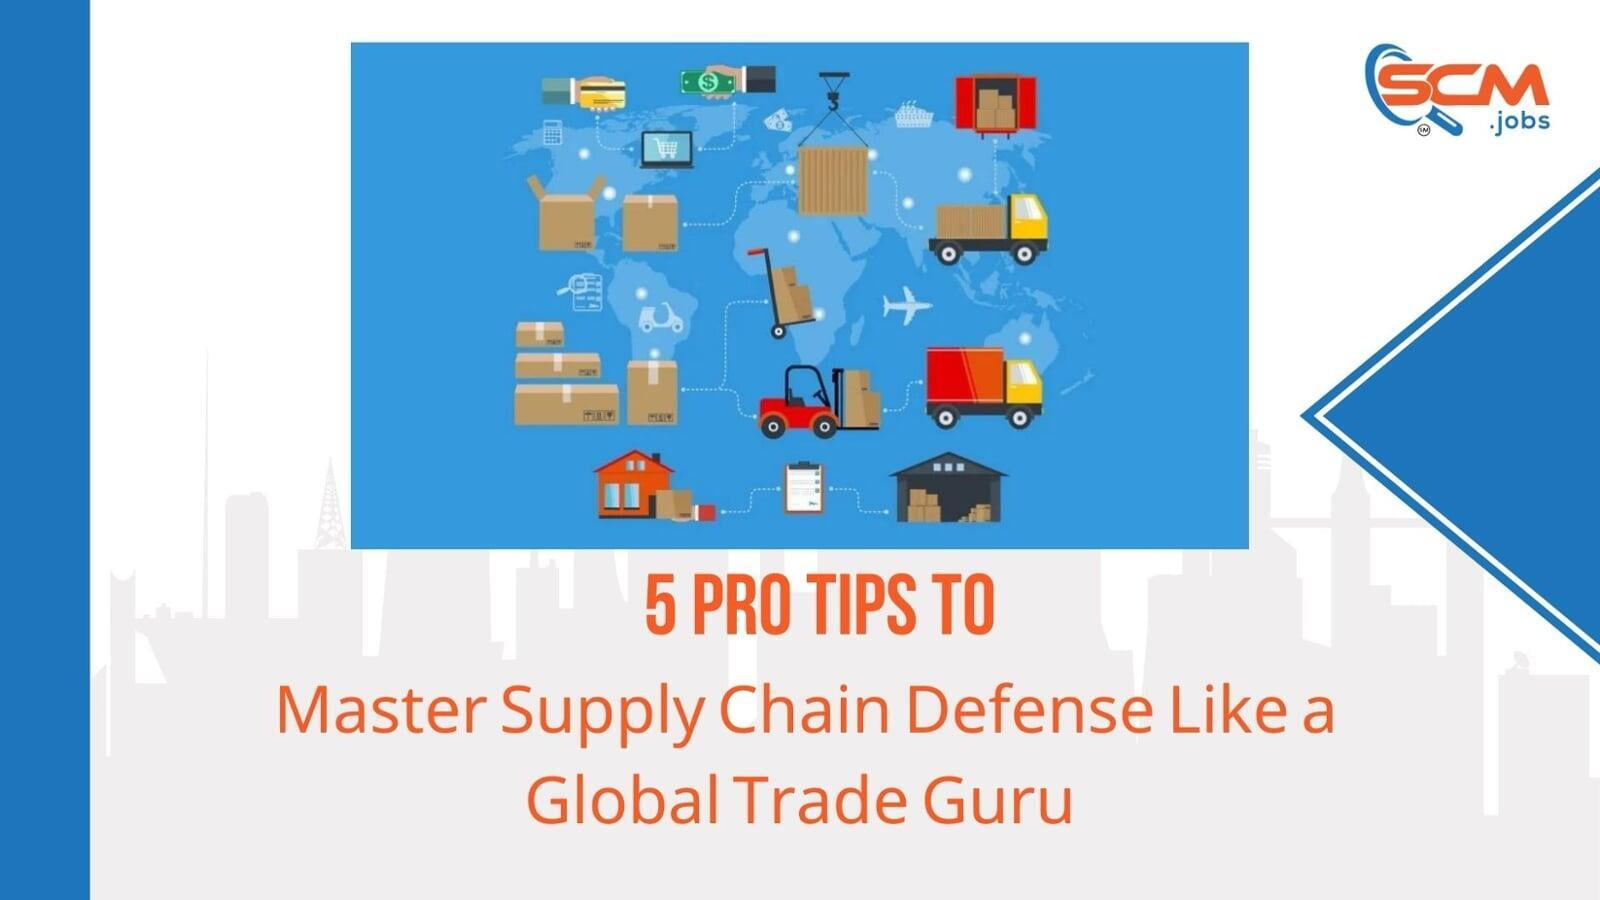 5 Pro Tips to Master Supply Chain Defense Like a Global Trade Guru